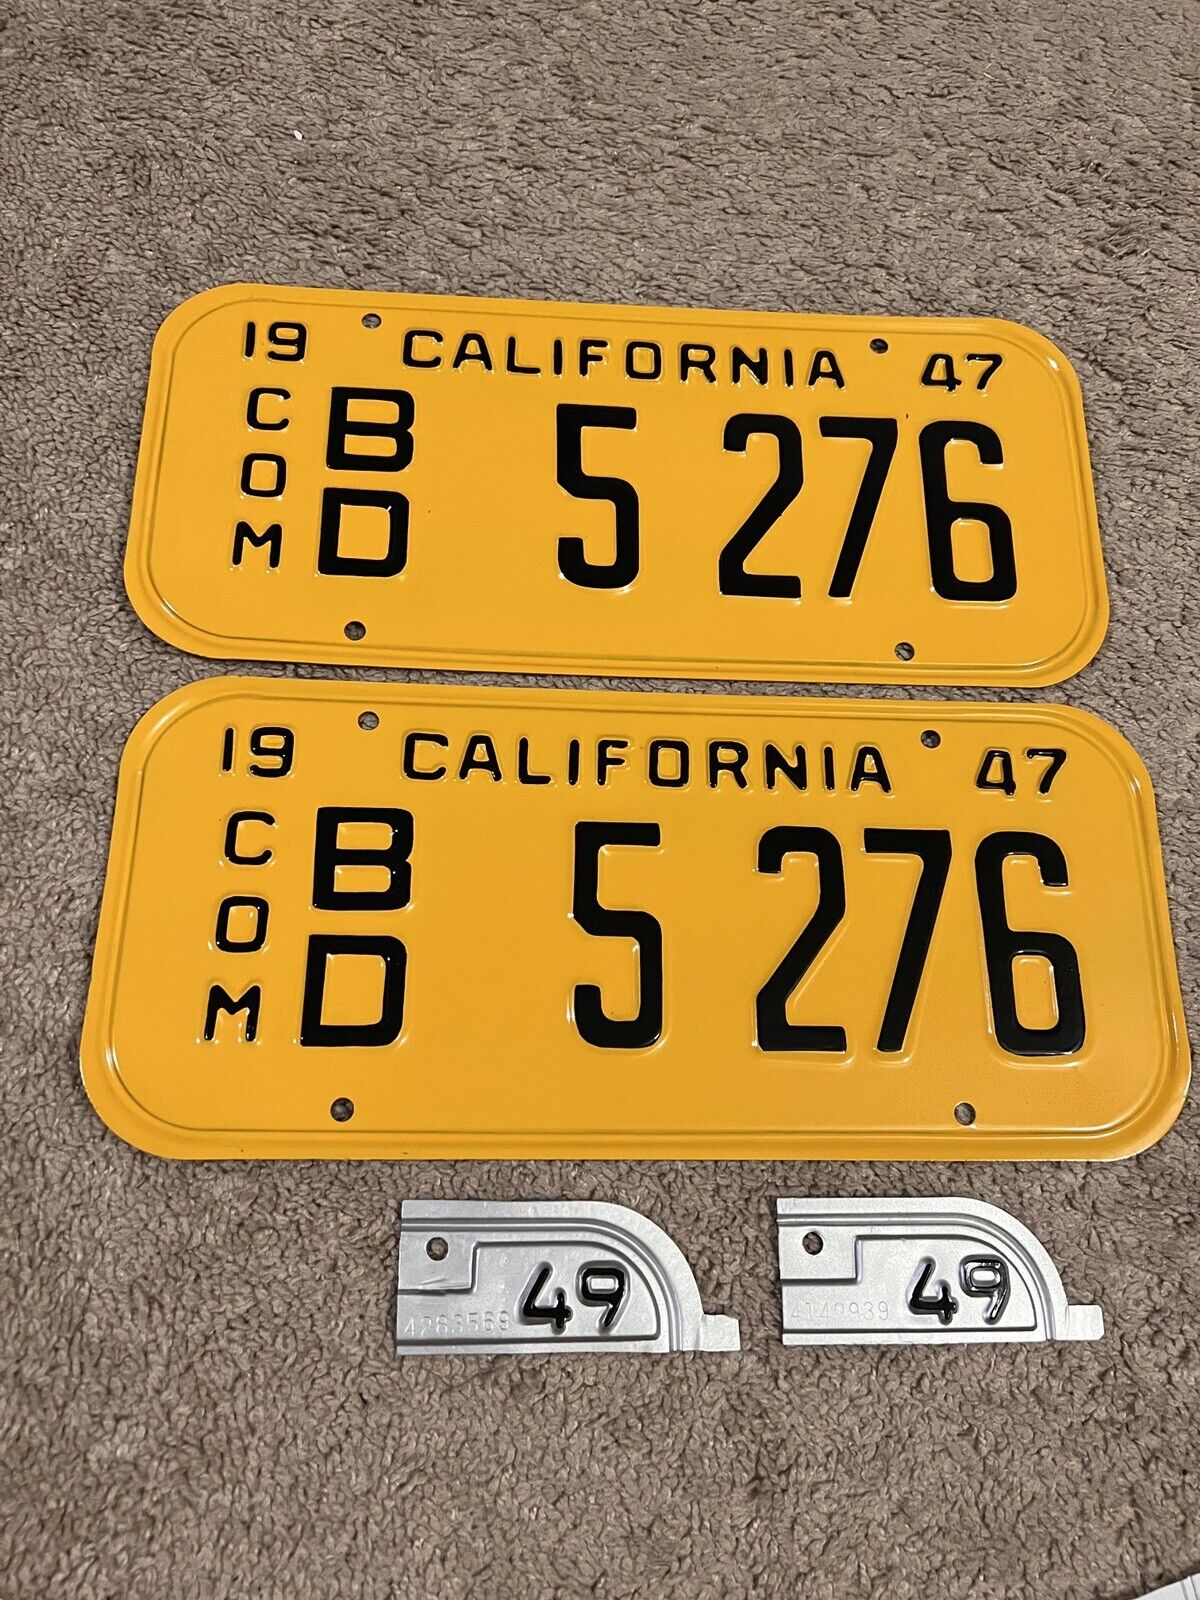 1947 1948 1949 1950 1951 CA Truck License Plate Pair Restored DMV Clear +49 Tags